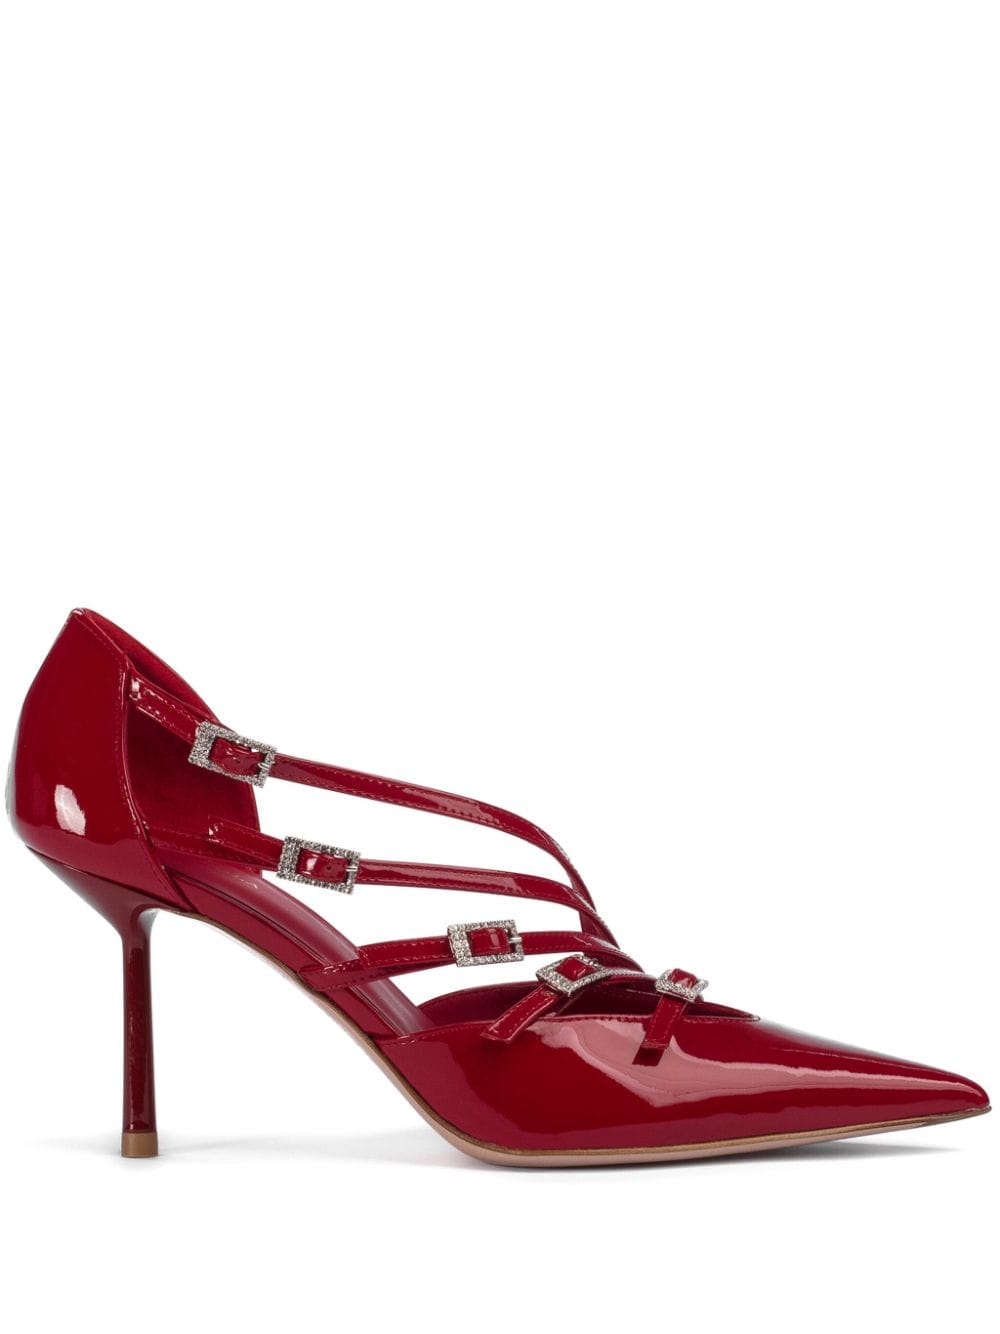 Le Silla Scarlet 100mm leather pumps - Red von Le Silla